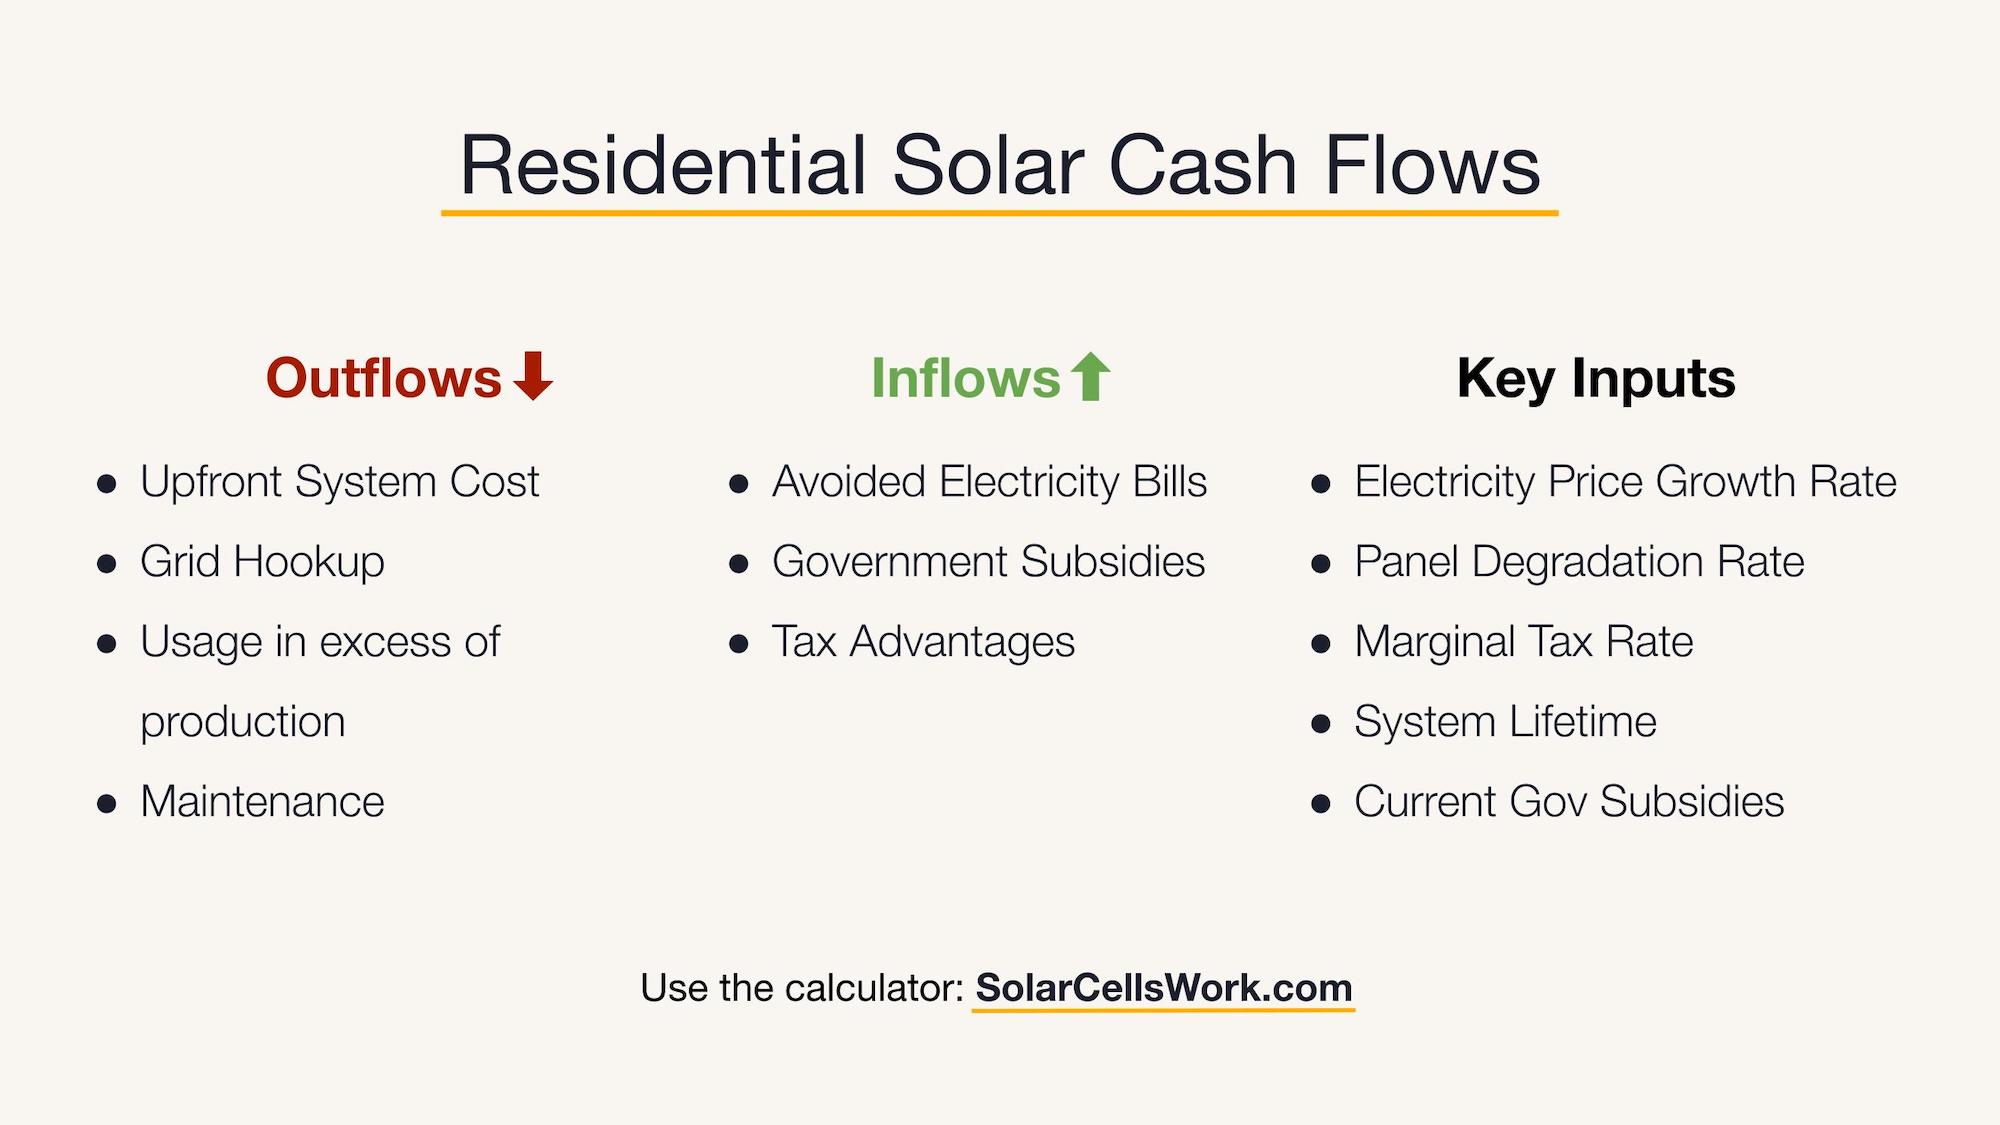 Cashflow Summary